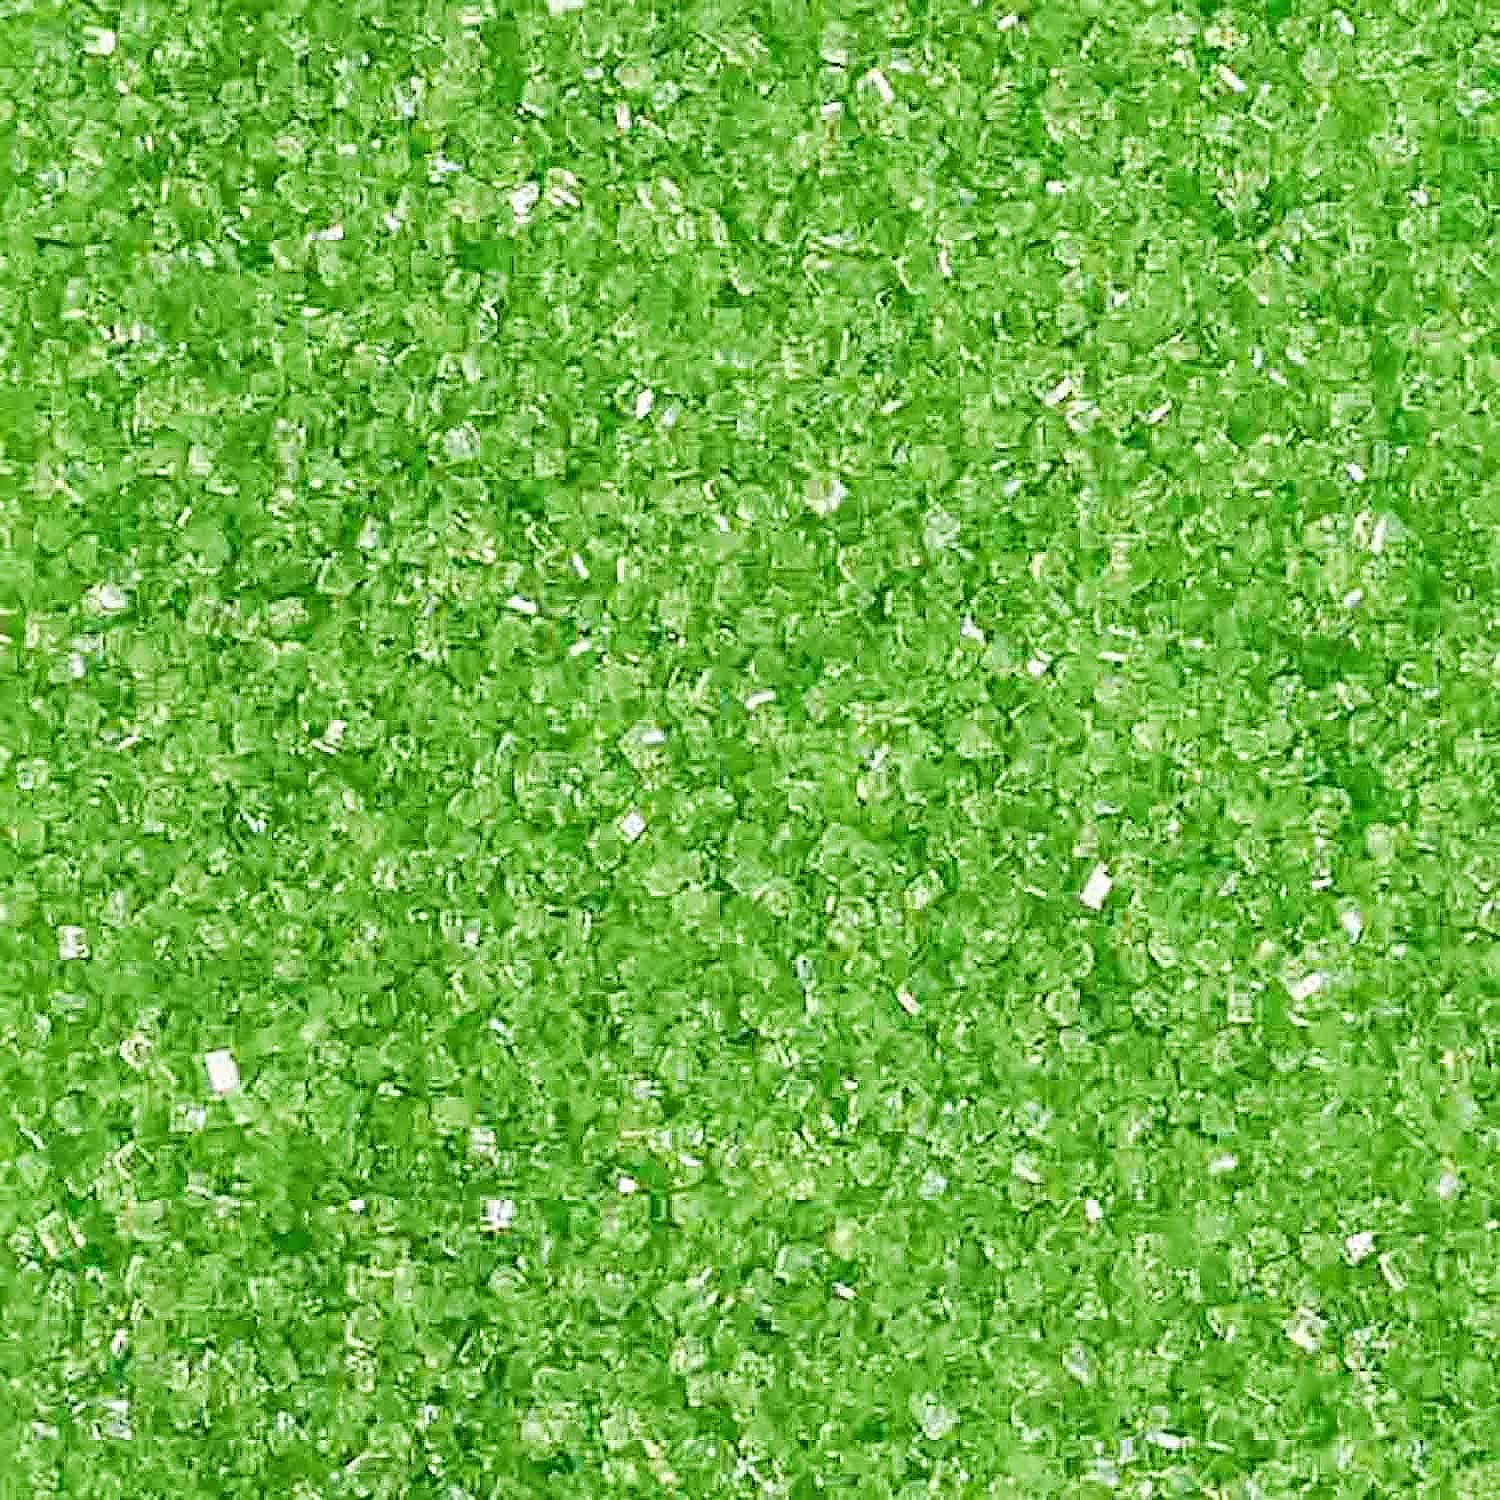 Lime Green Sanding Sugar